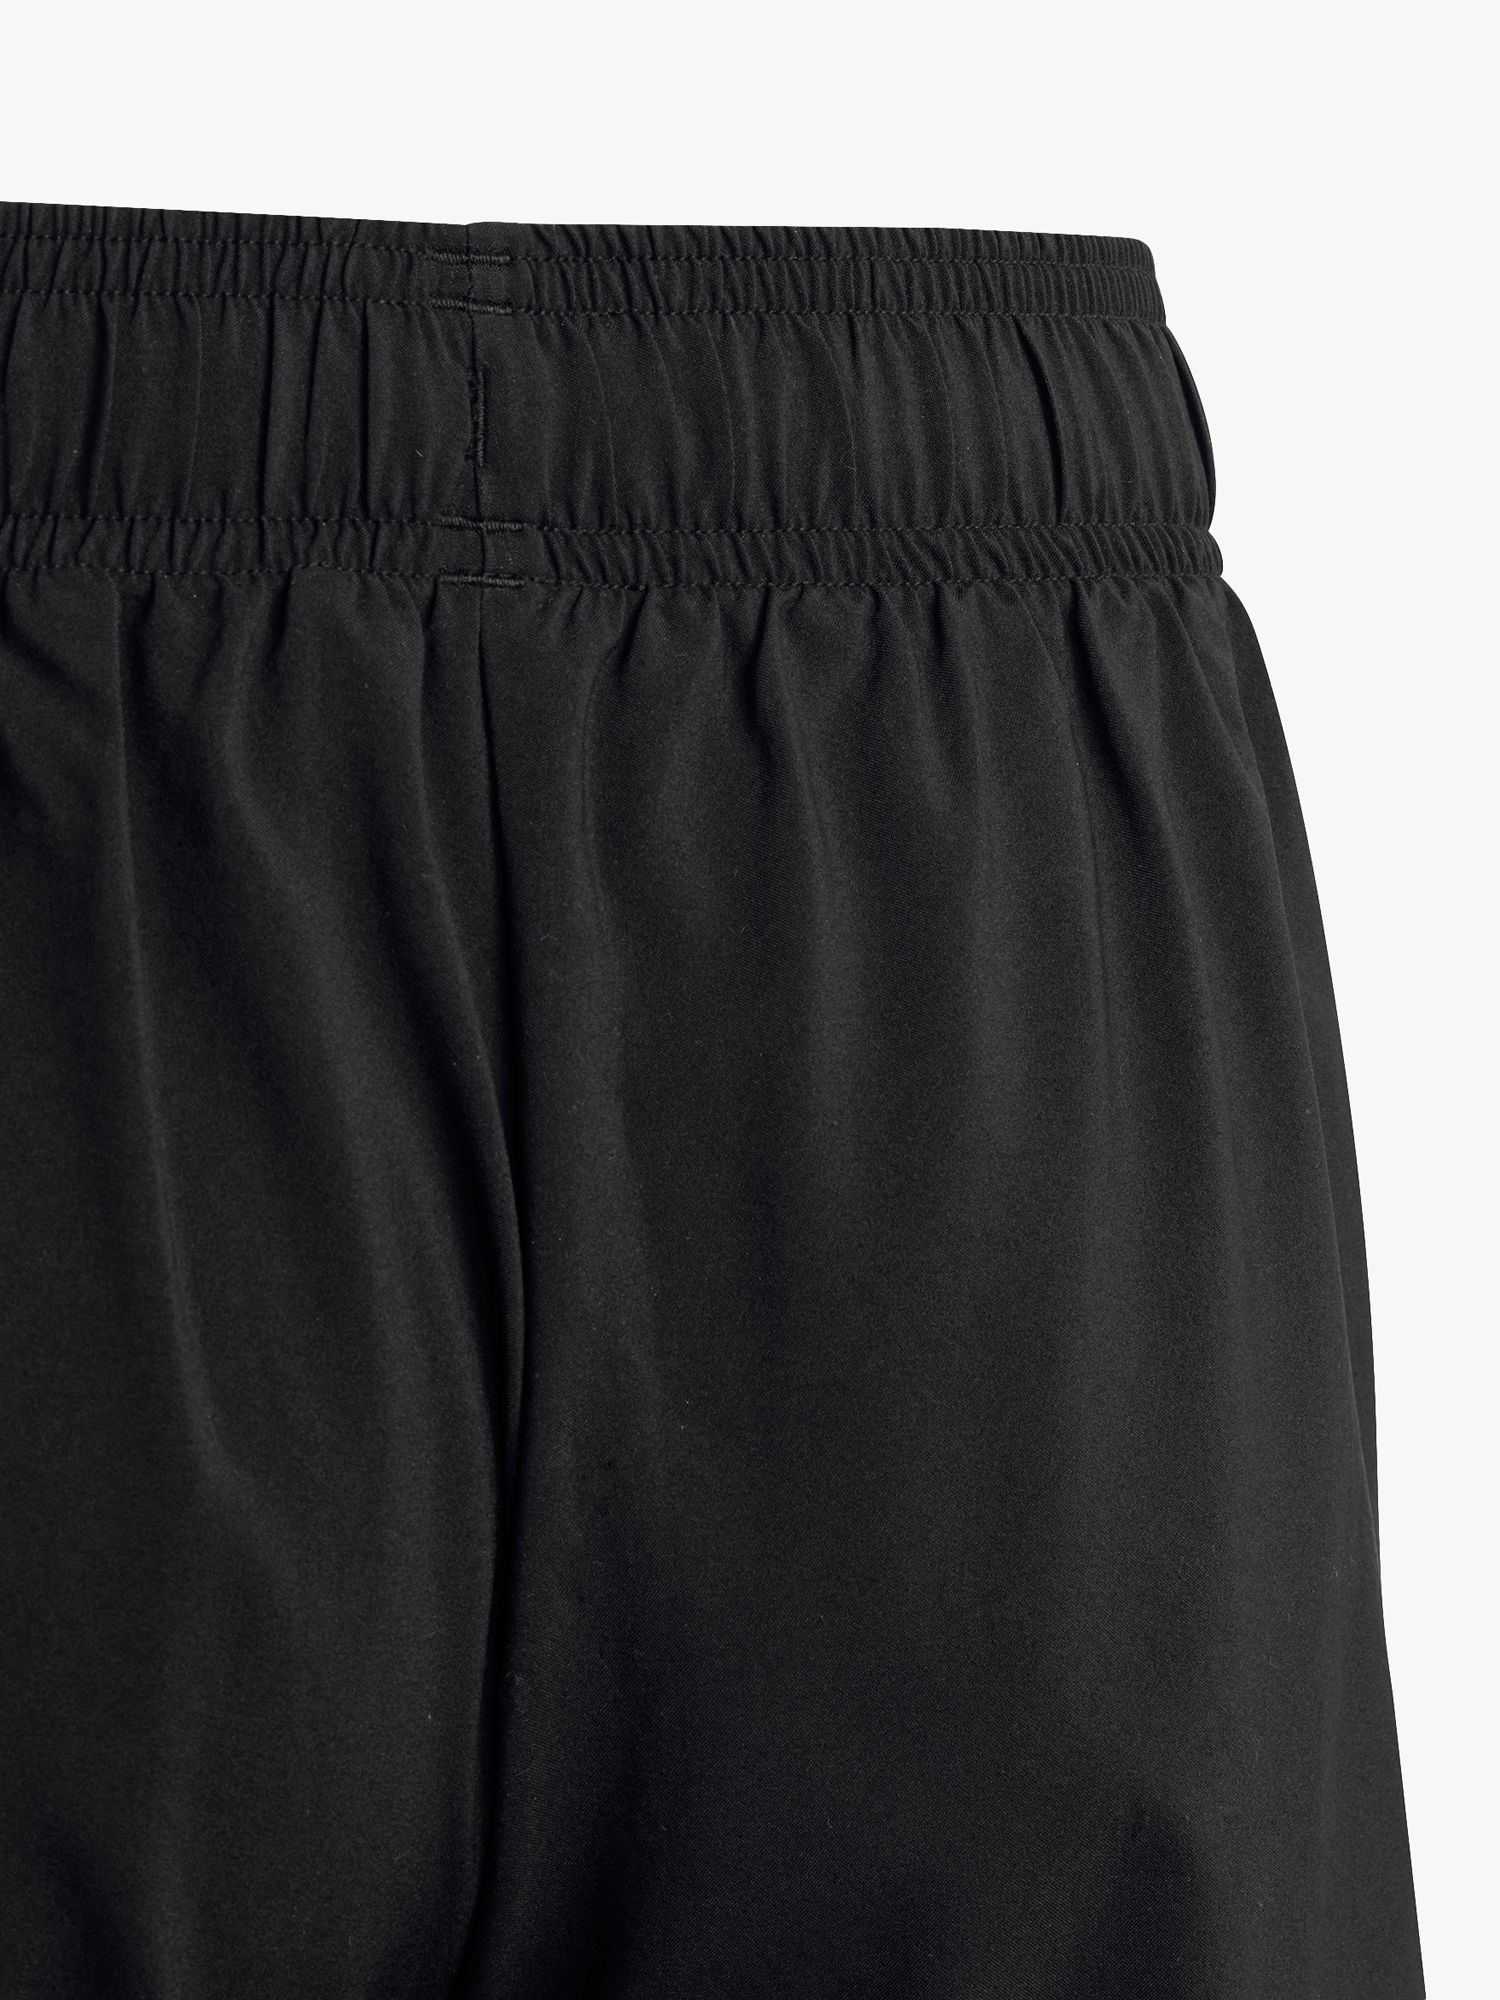 adidas Kids' AEROREADY Chelsea Shorts, Black at John Lewis & Partners